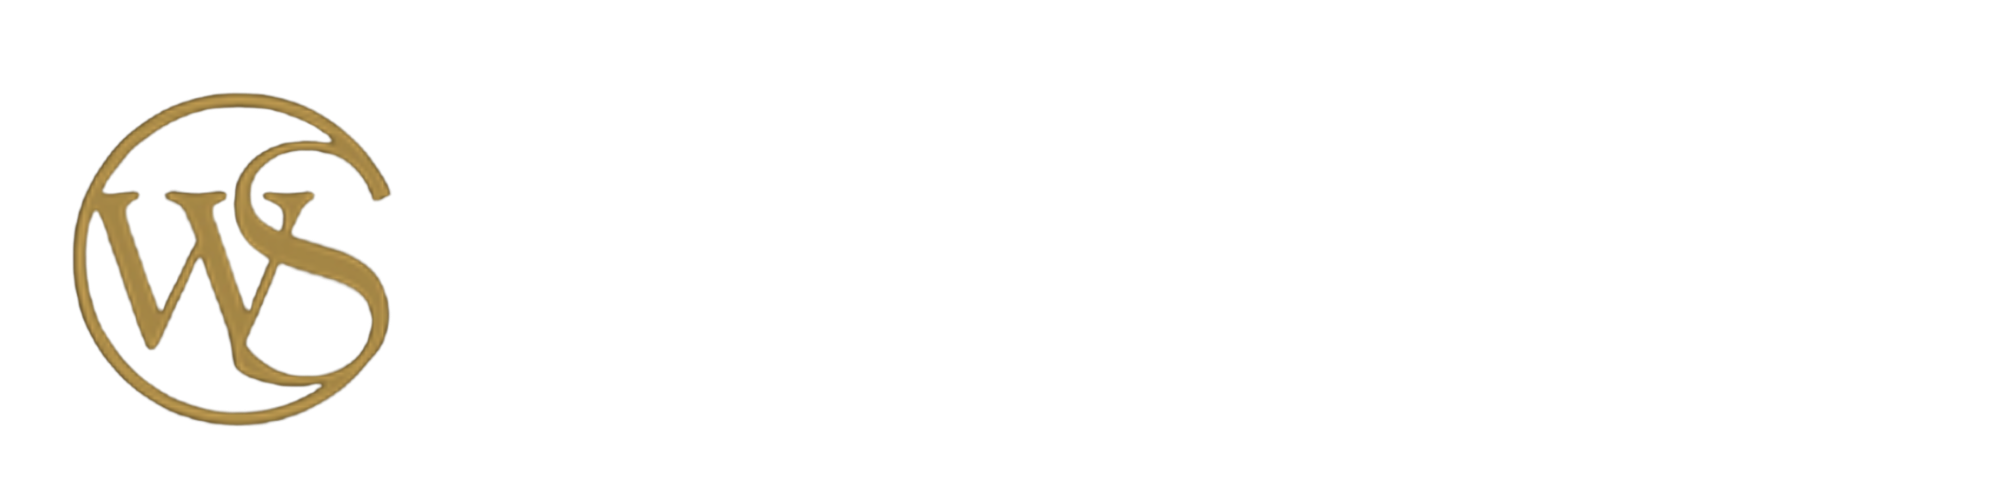 West Shefford Global Food Services